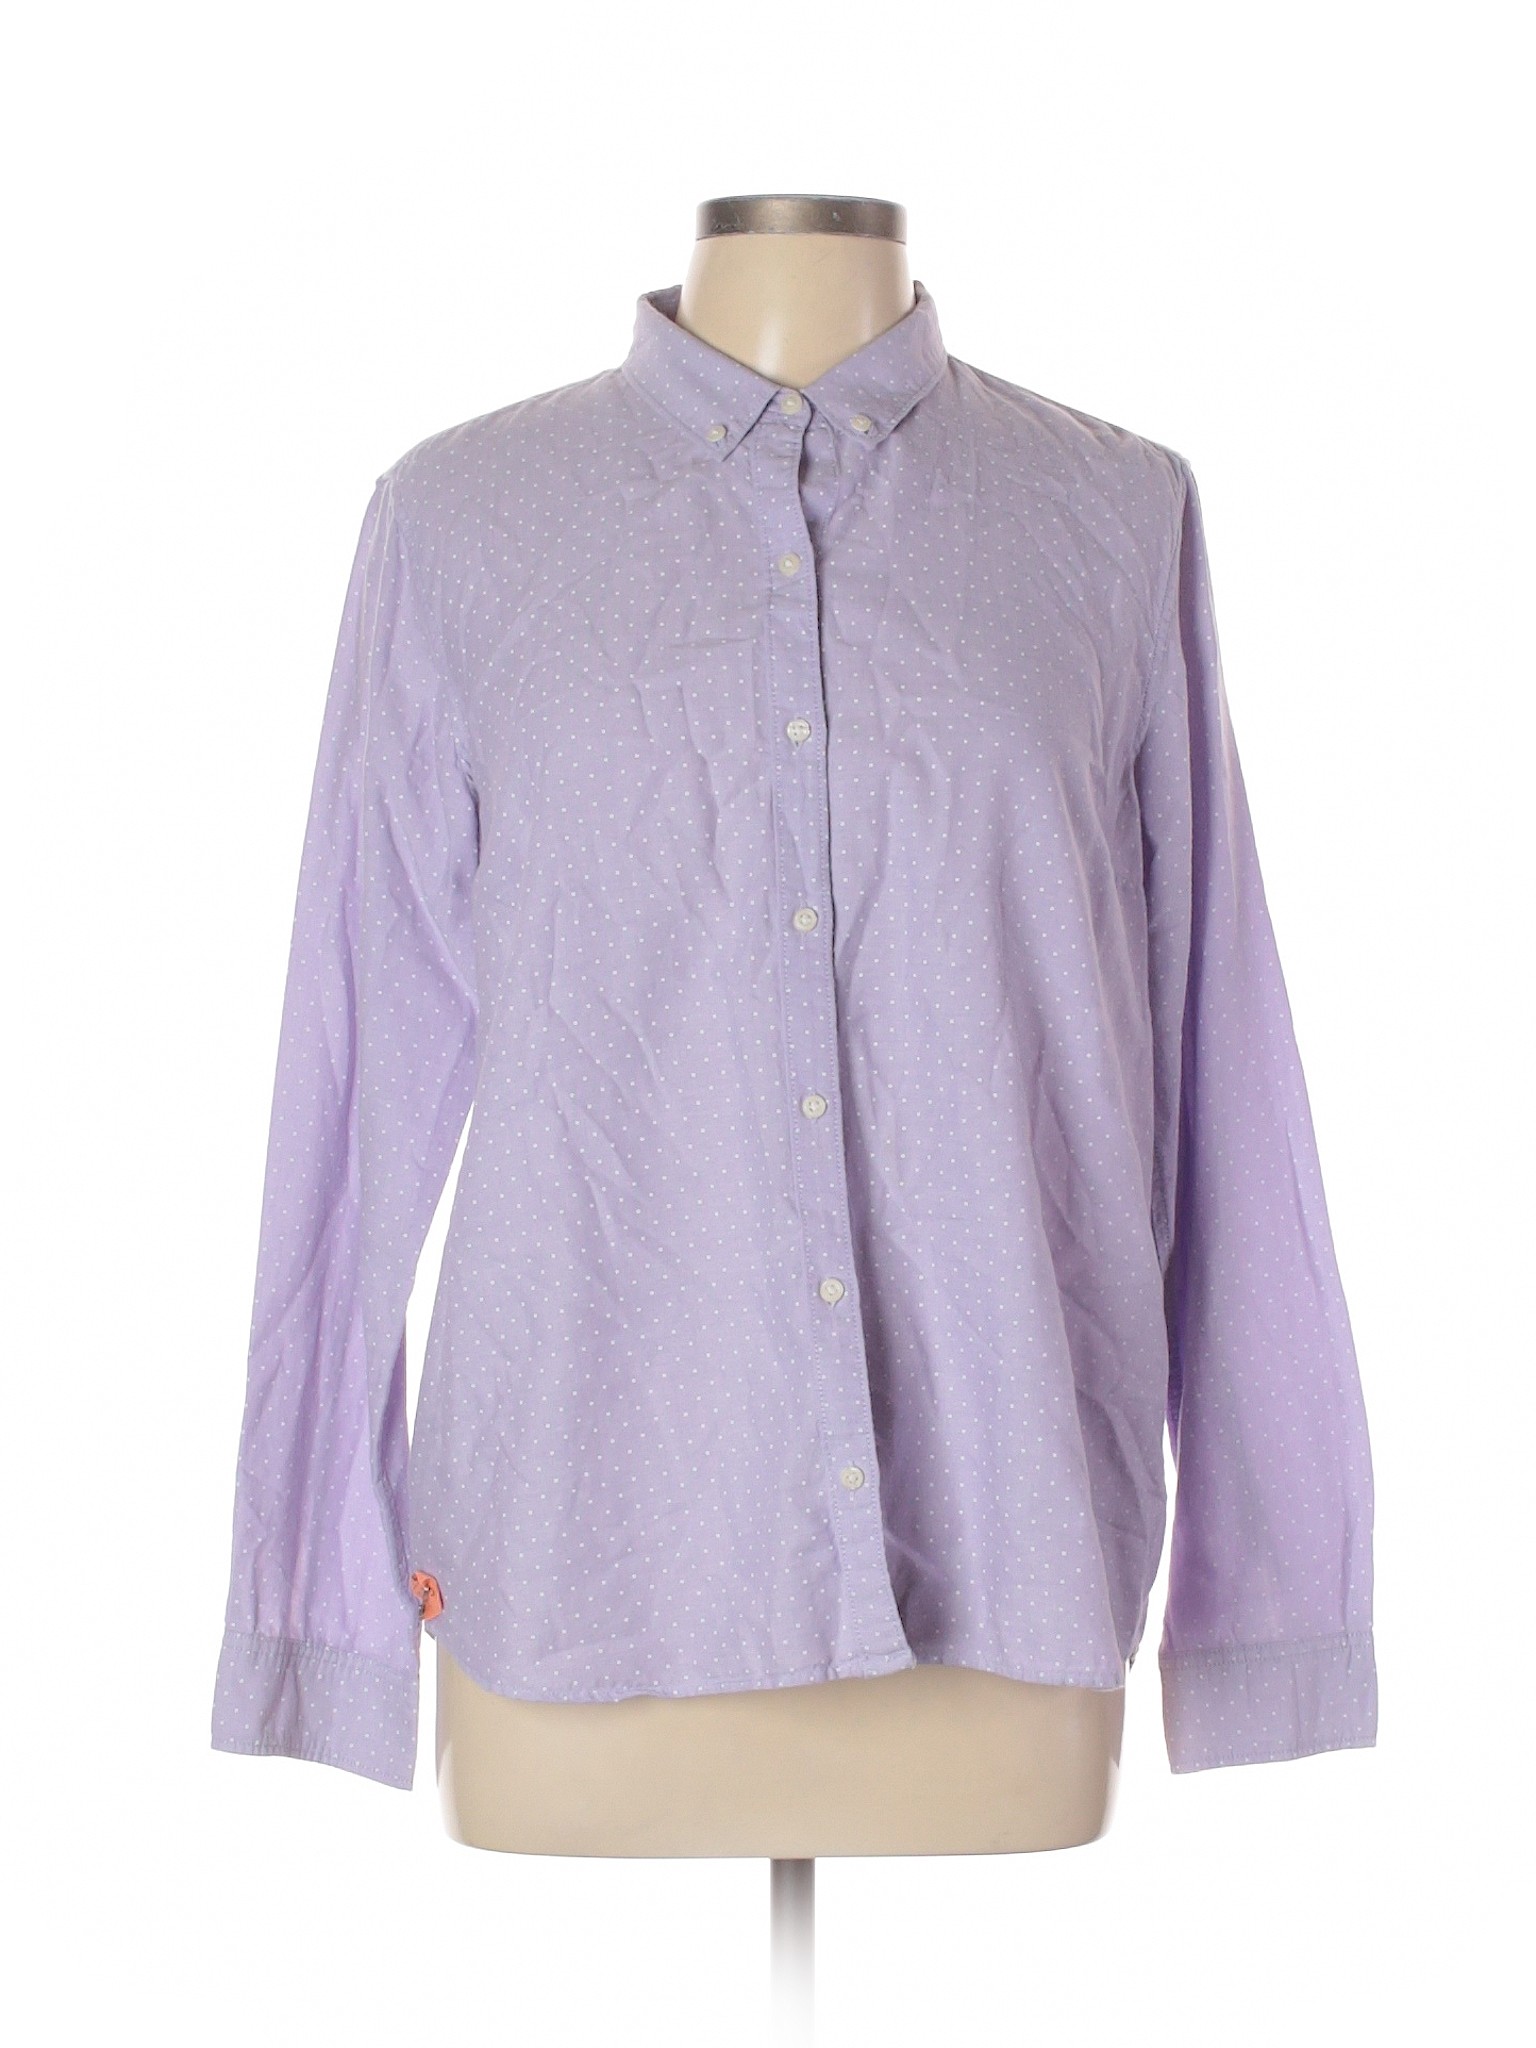 Gap Women Purple Long Sleeve Button-Down Shirt XL | eBay